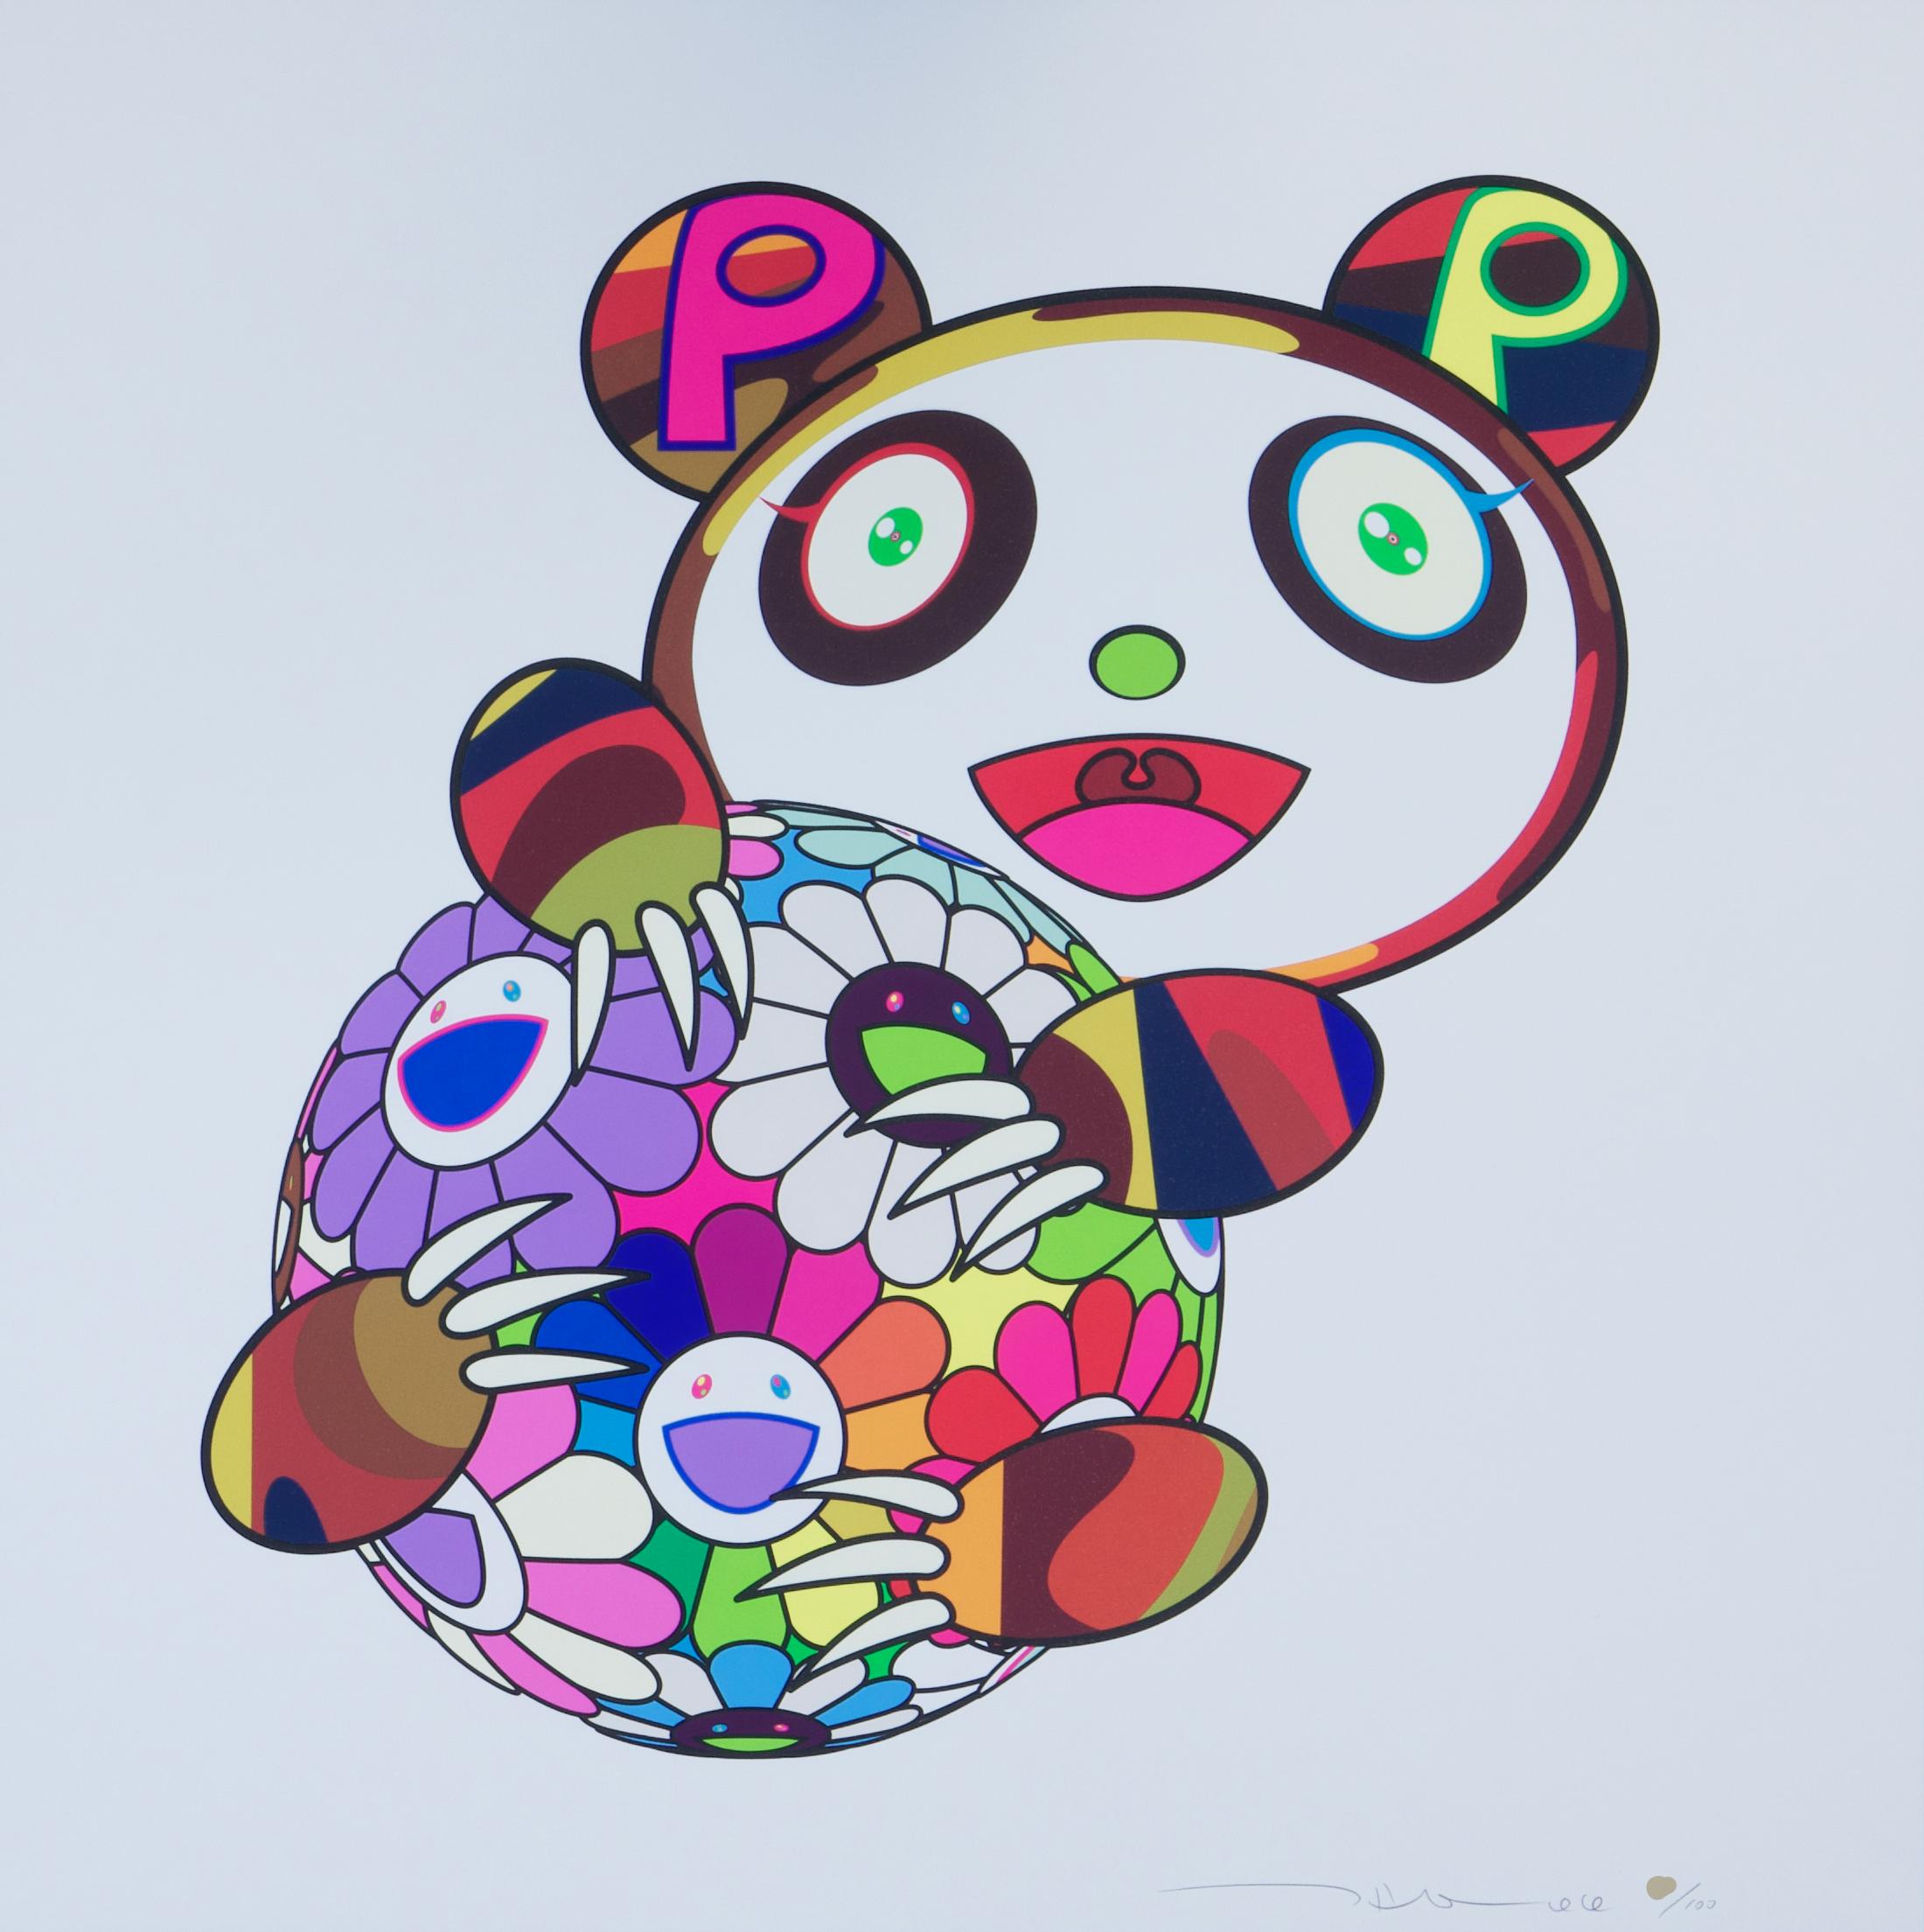 A Panda Cub Hugging a Ball of Flowers - Print by Takashi Murakami